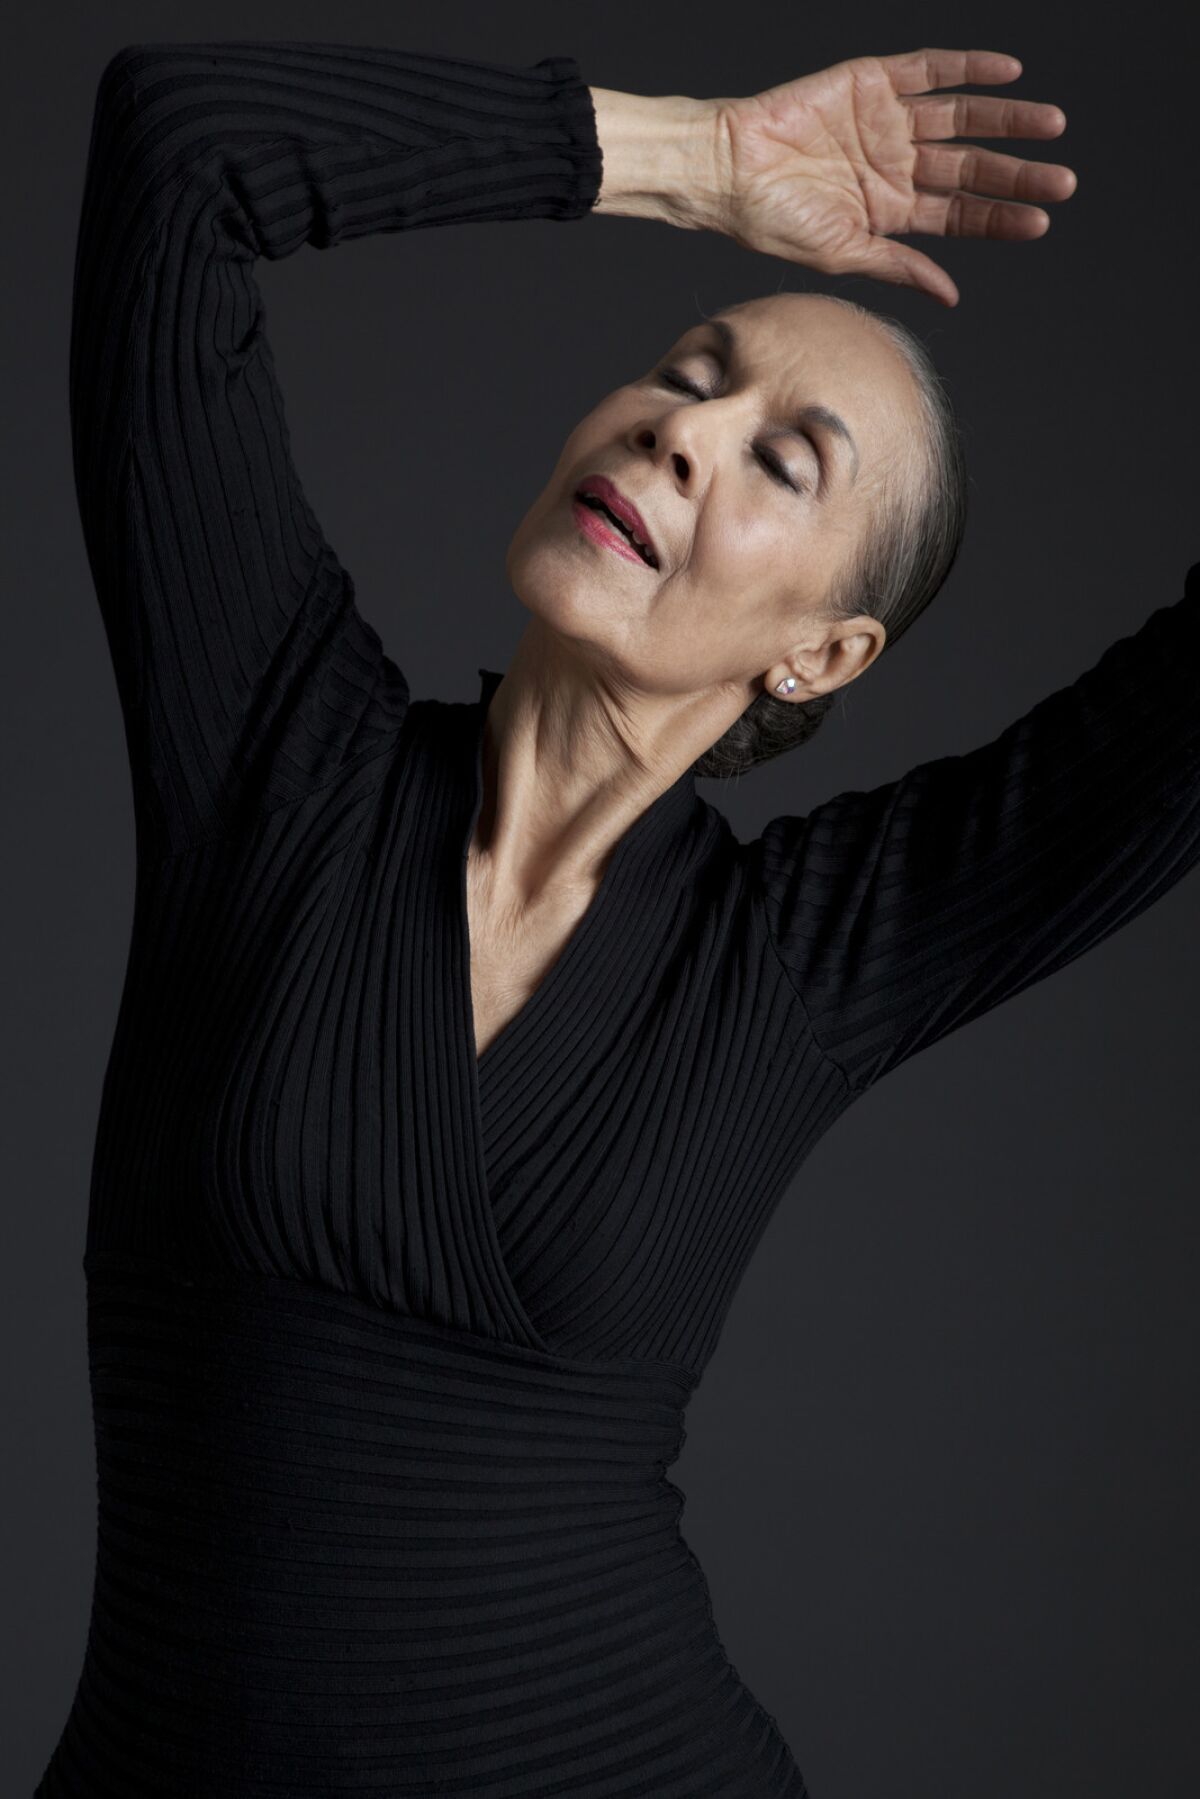 Carmen de Lavallade (Wallis Annernberg Center for the Performing Arts)